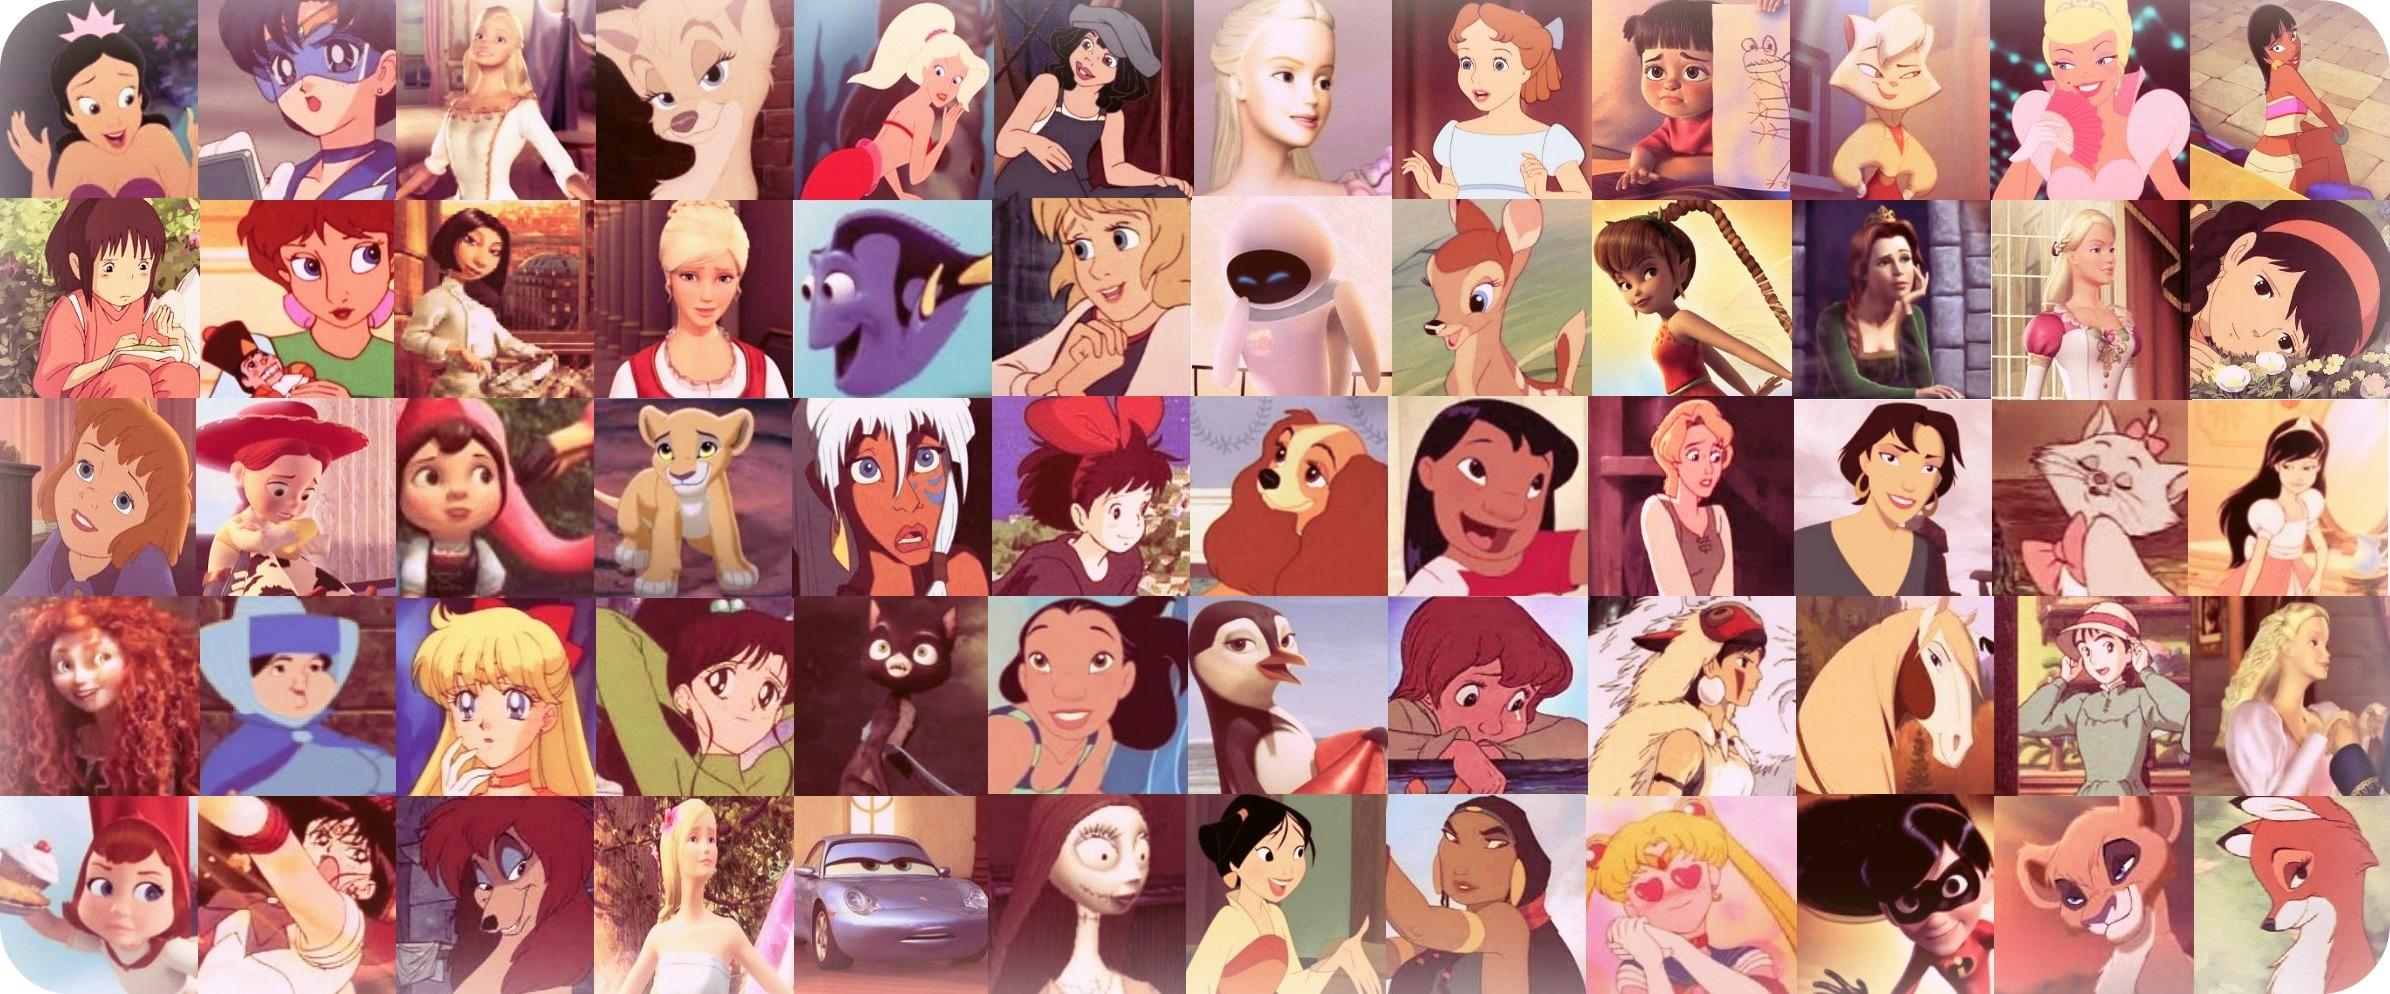 Heroines - Childhood Animated Movie Heroines Photo (28194898) - Fanpop